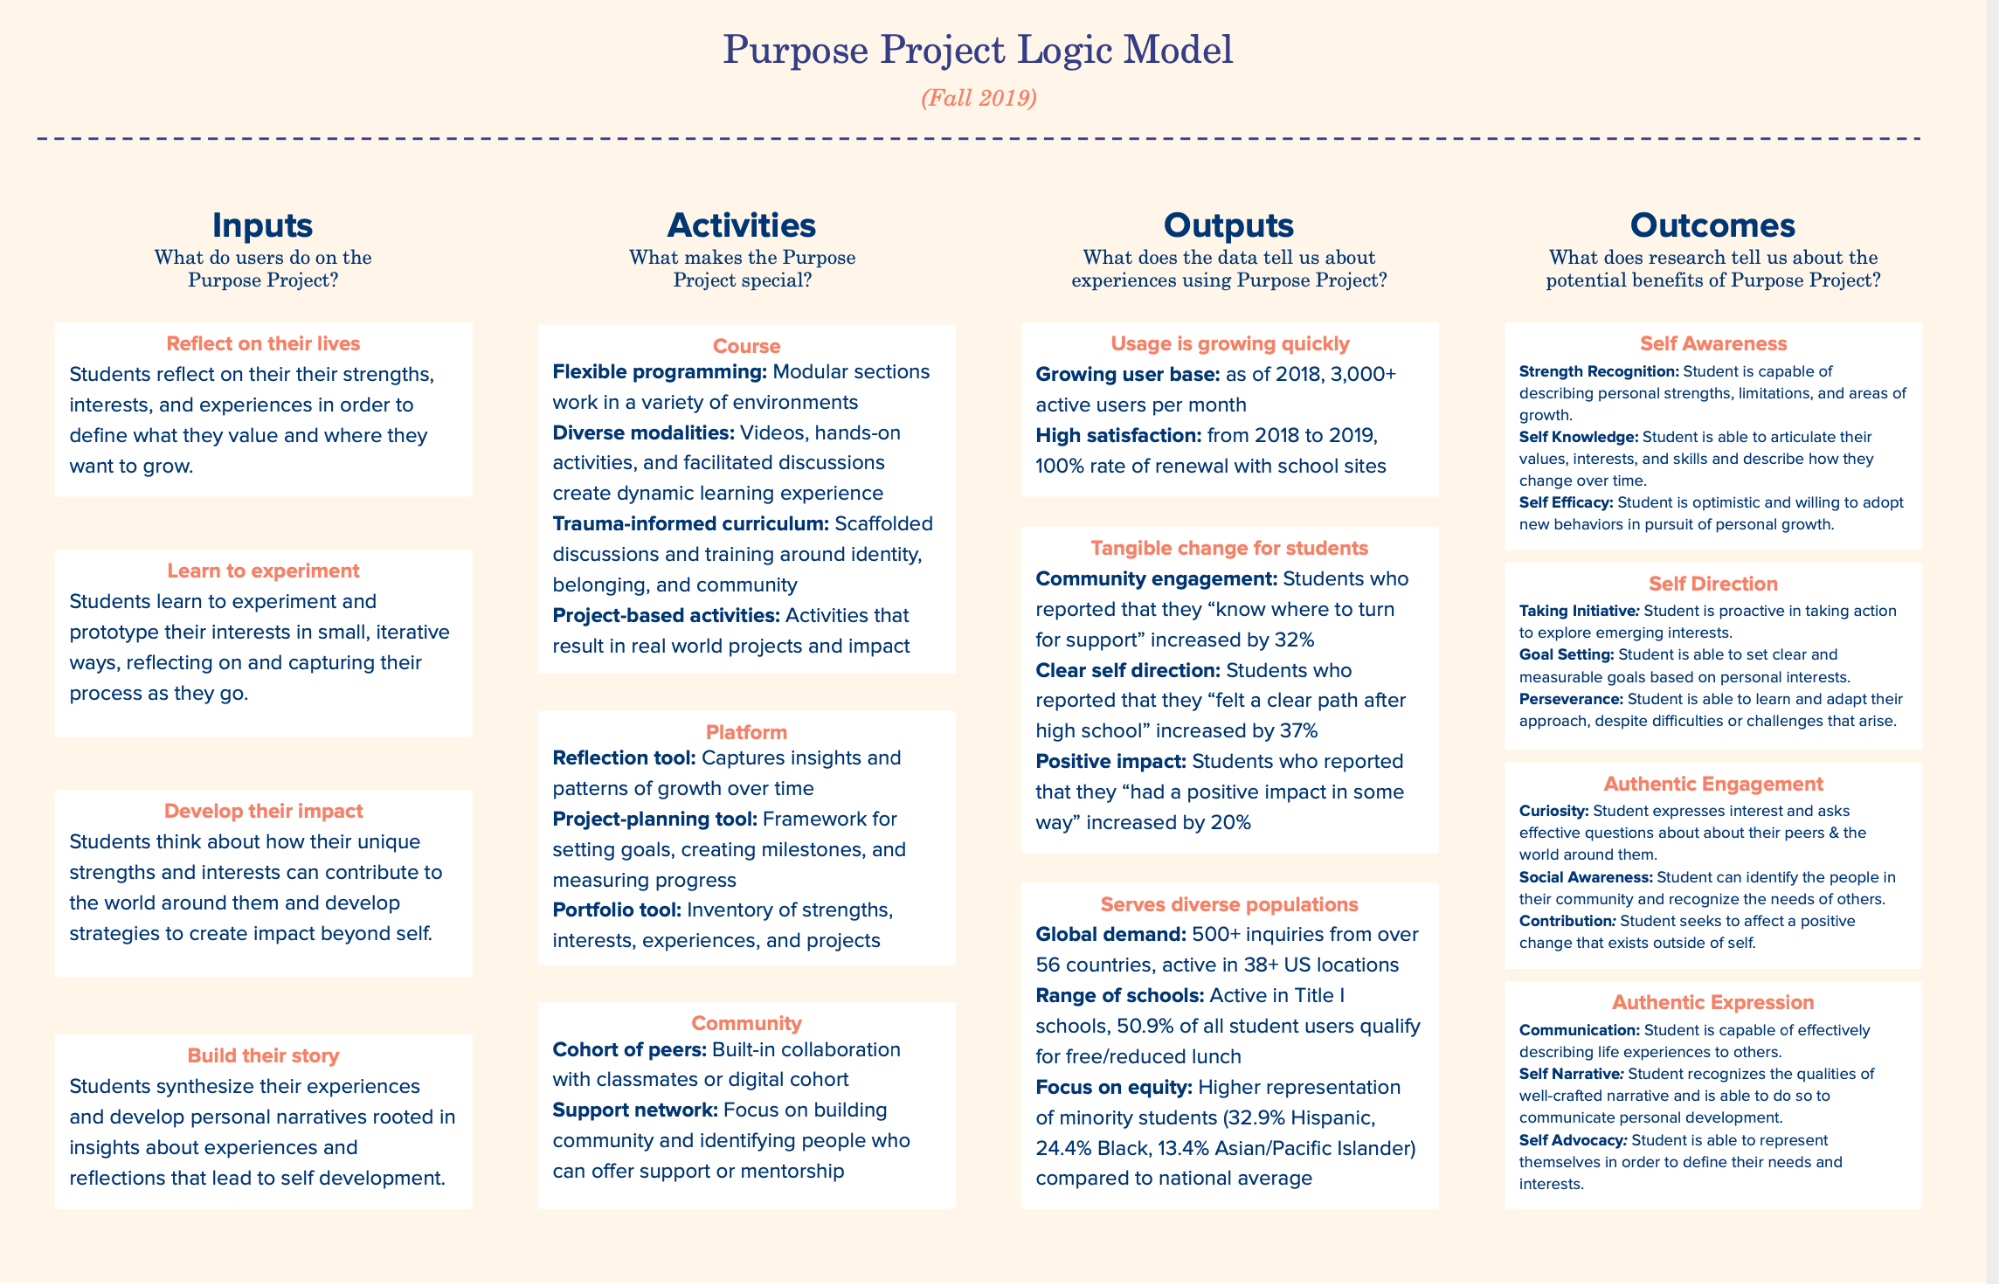 Illustration of Purpose Project Logic Model